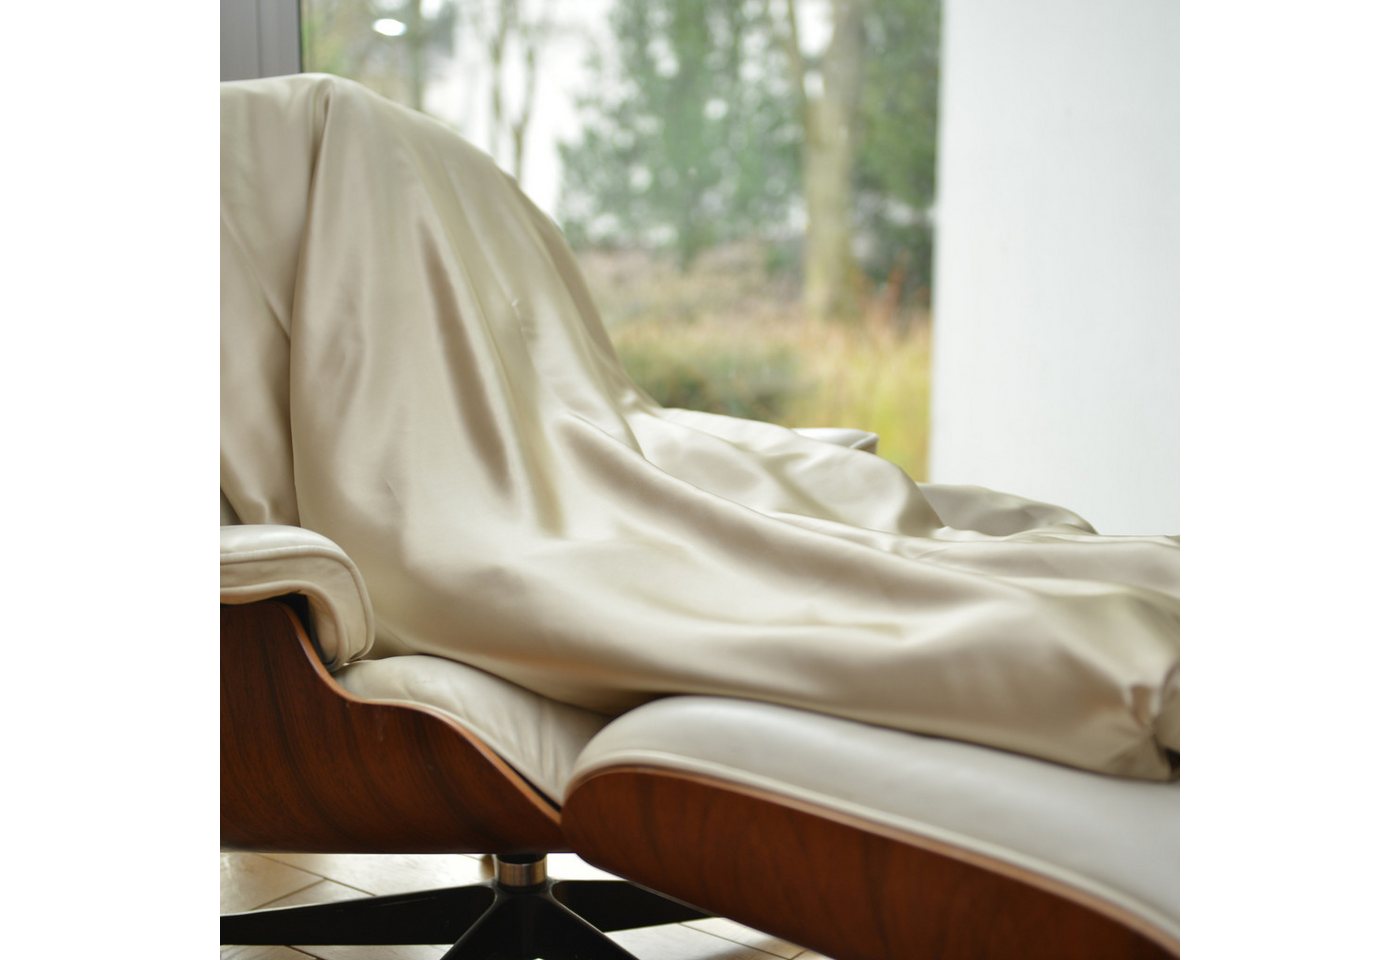 Bettbezug Seiden-Bettbezug aus Maulbeerseide, taupe, orignee von orignee